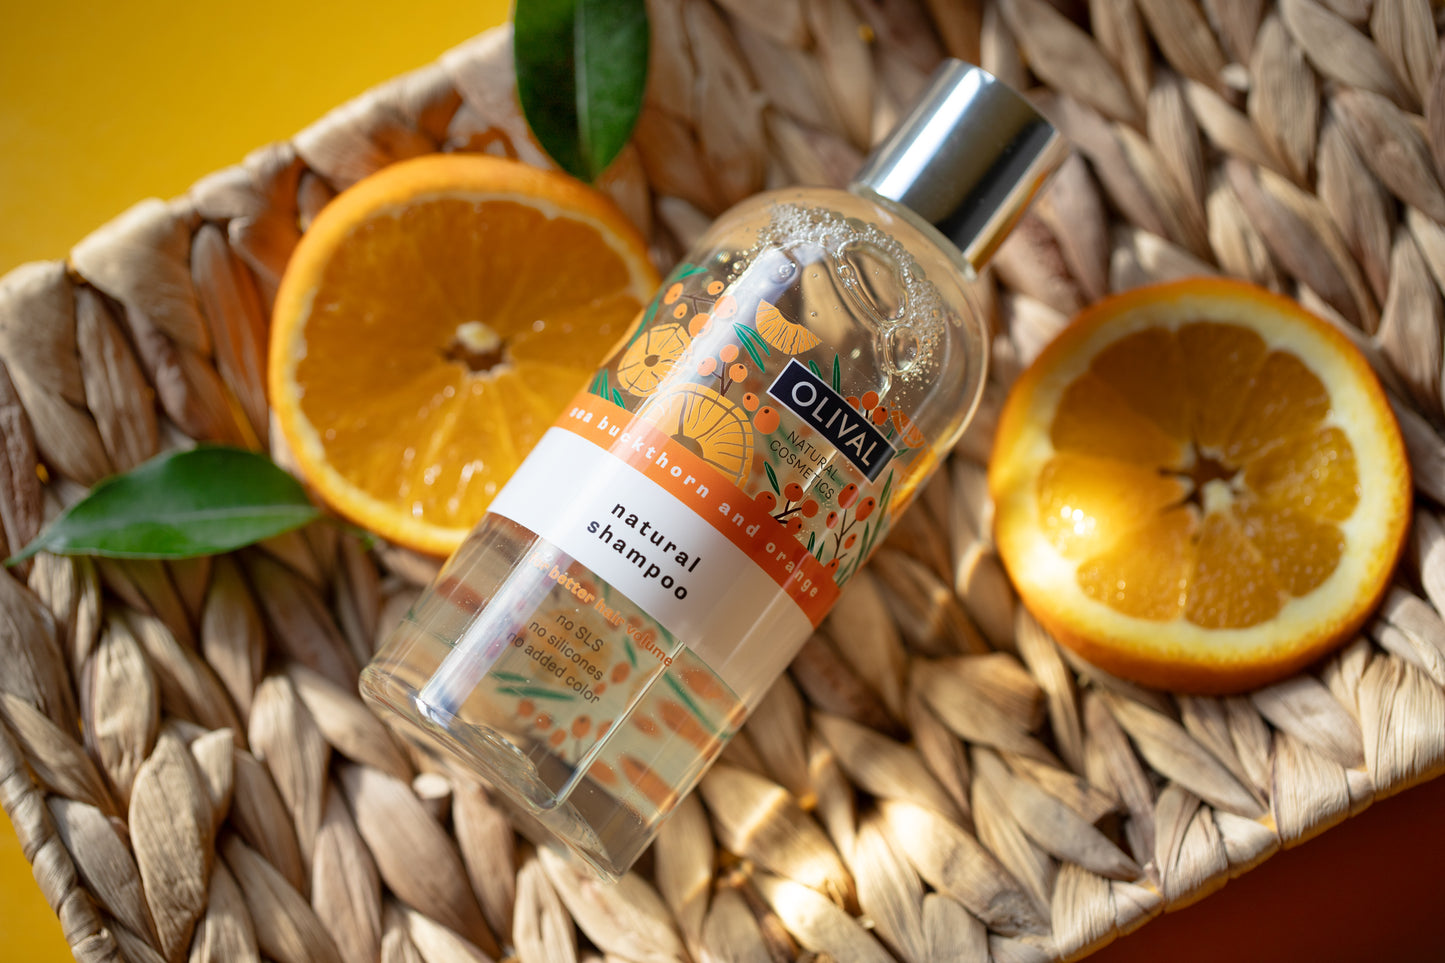 Prirodni šampon Pasji trn i naranča